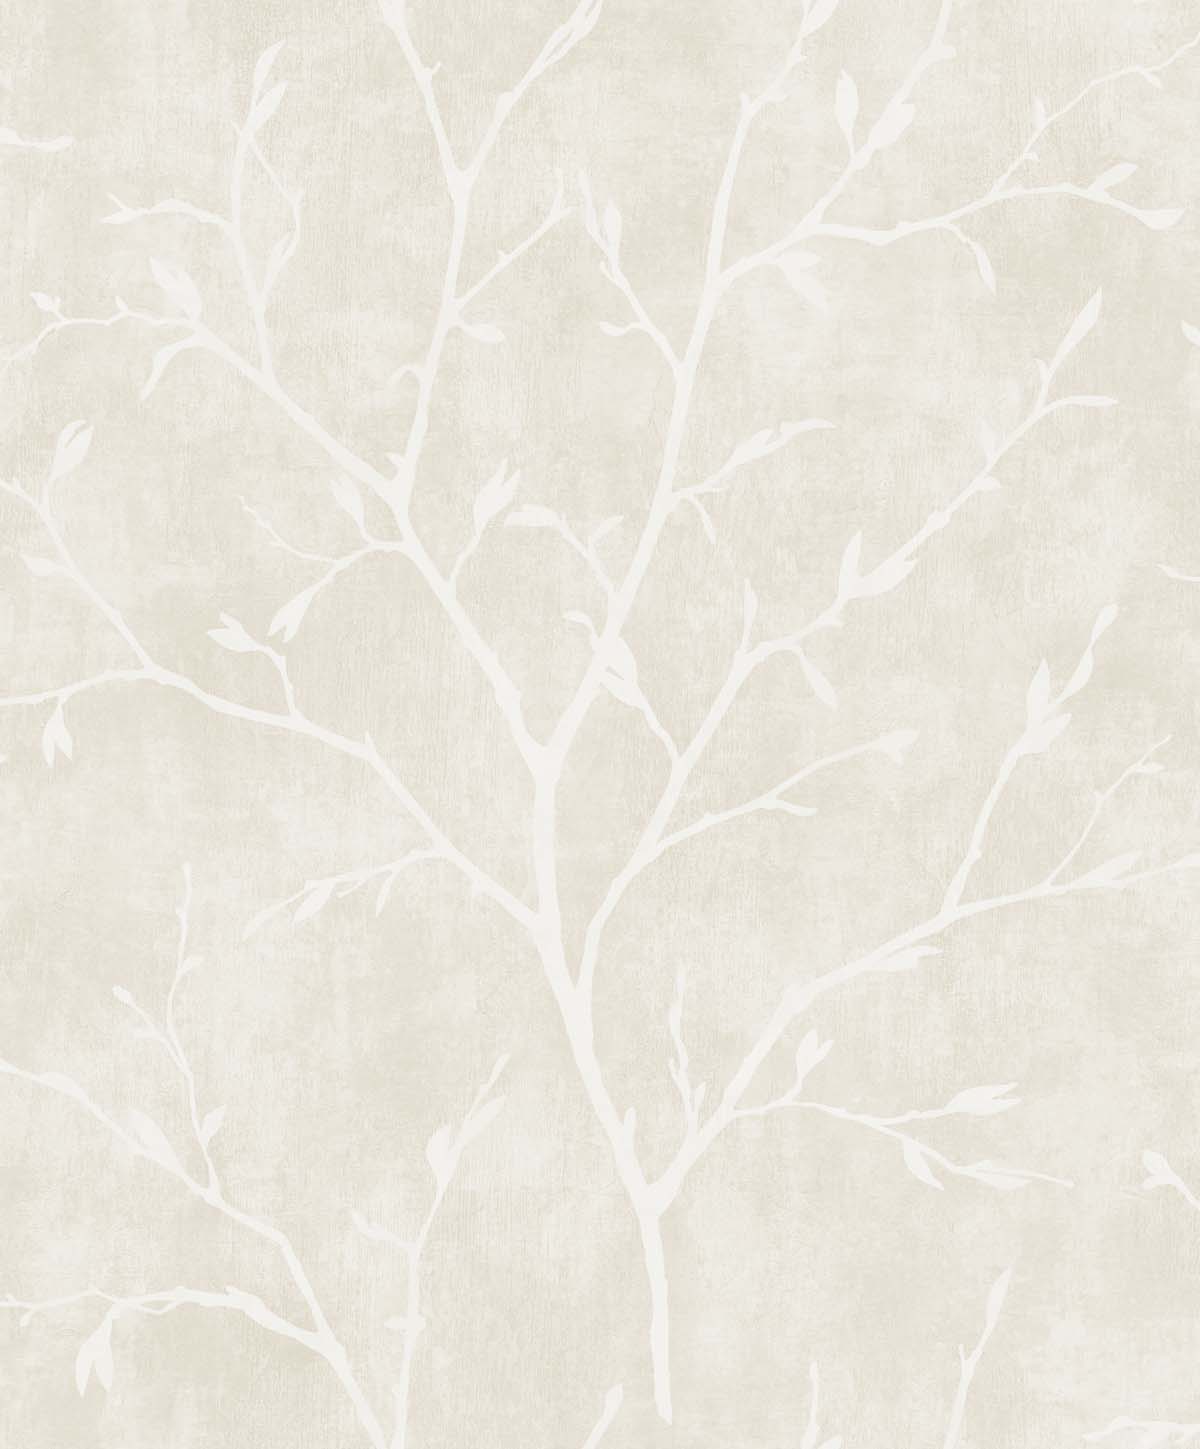 EW10205 | Avena Branches, Beige - Seabrook Designs Wallpaper